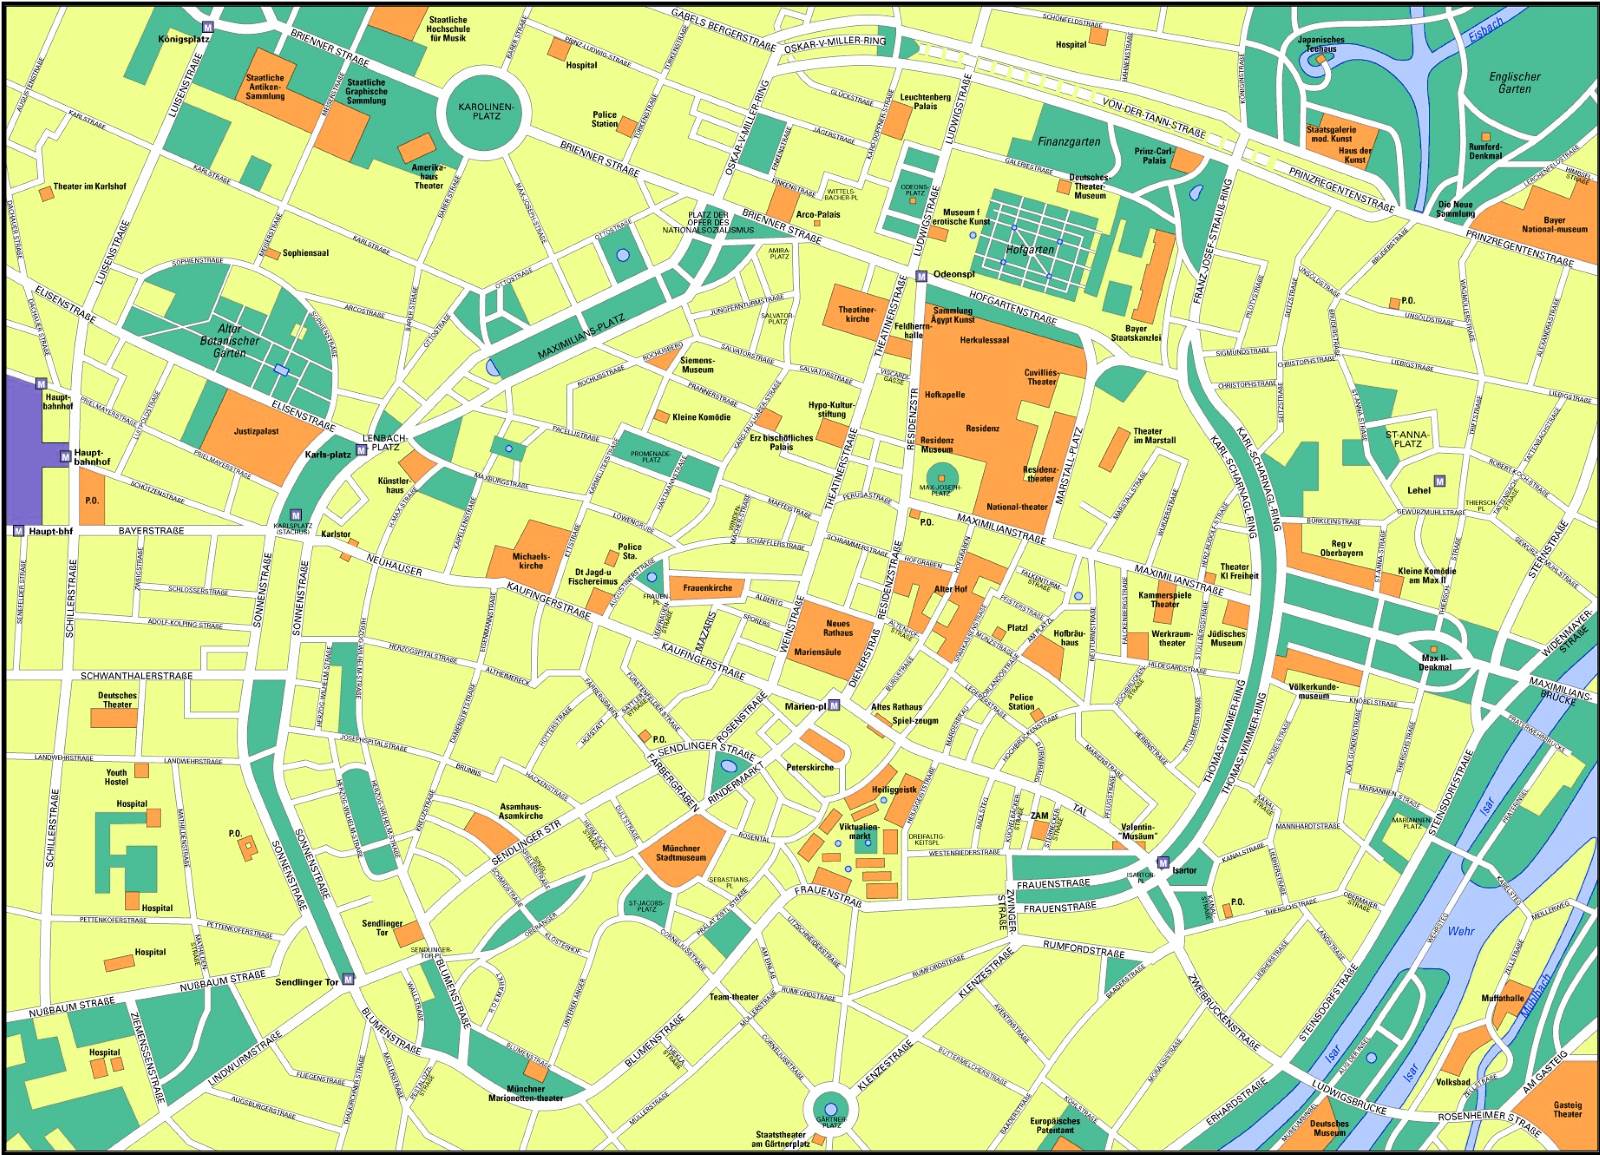 Munich city center on a map